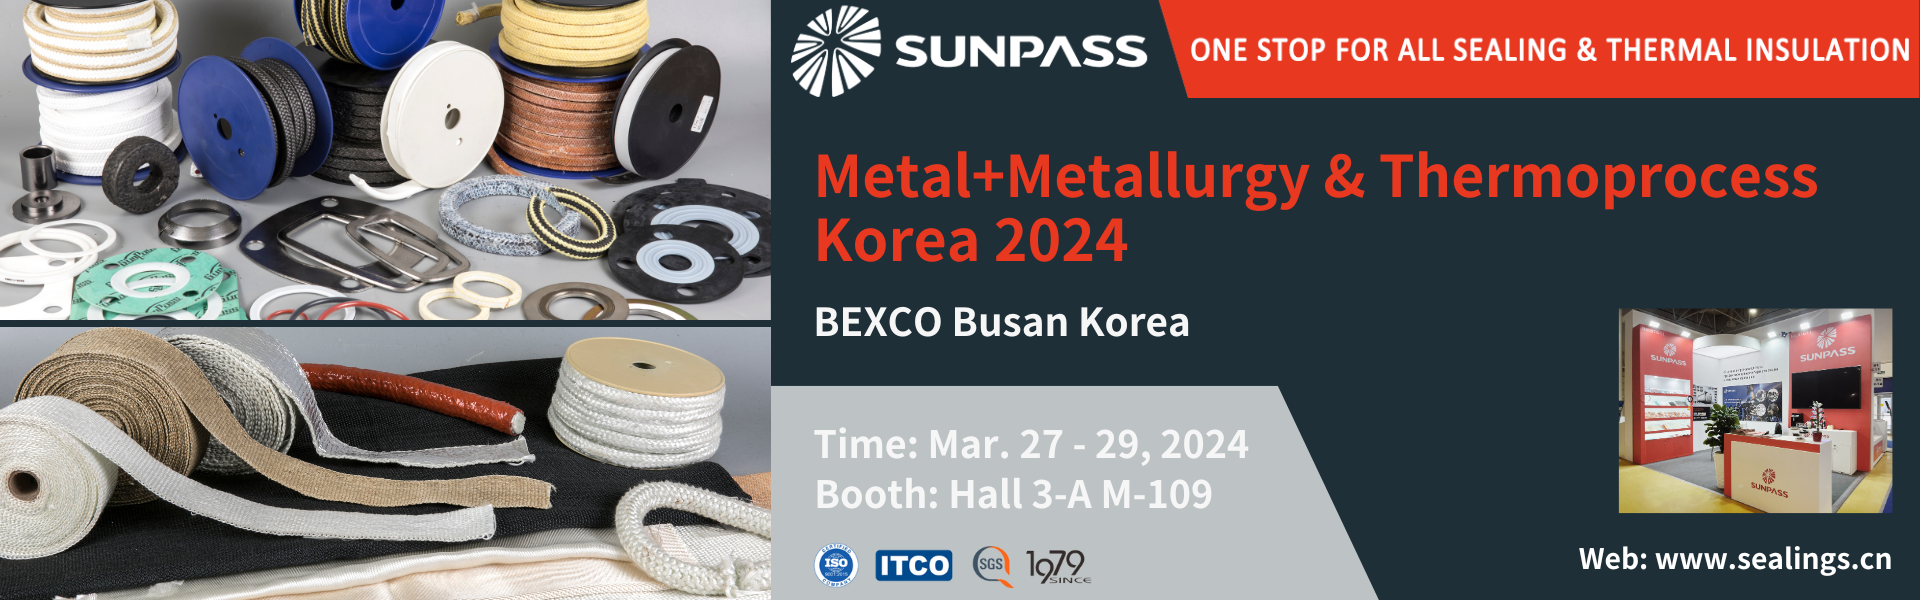 Metal+Metallurgy & Thermoprocess Korea